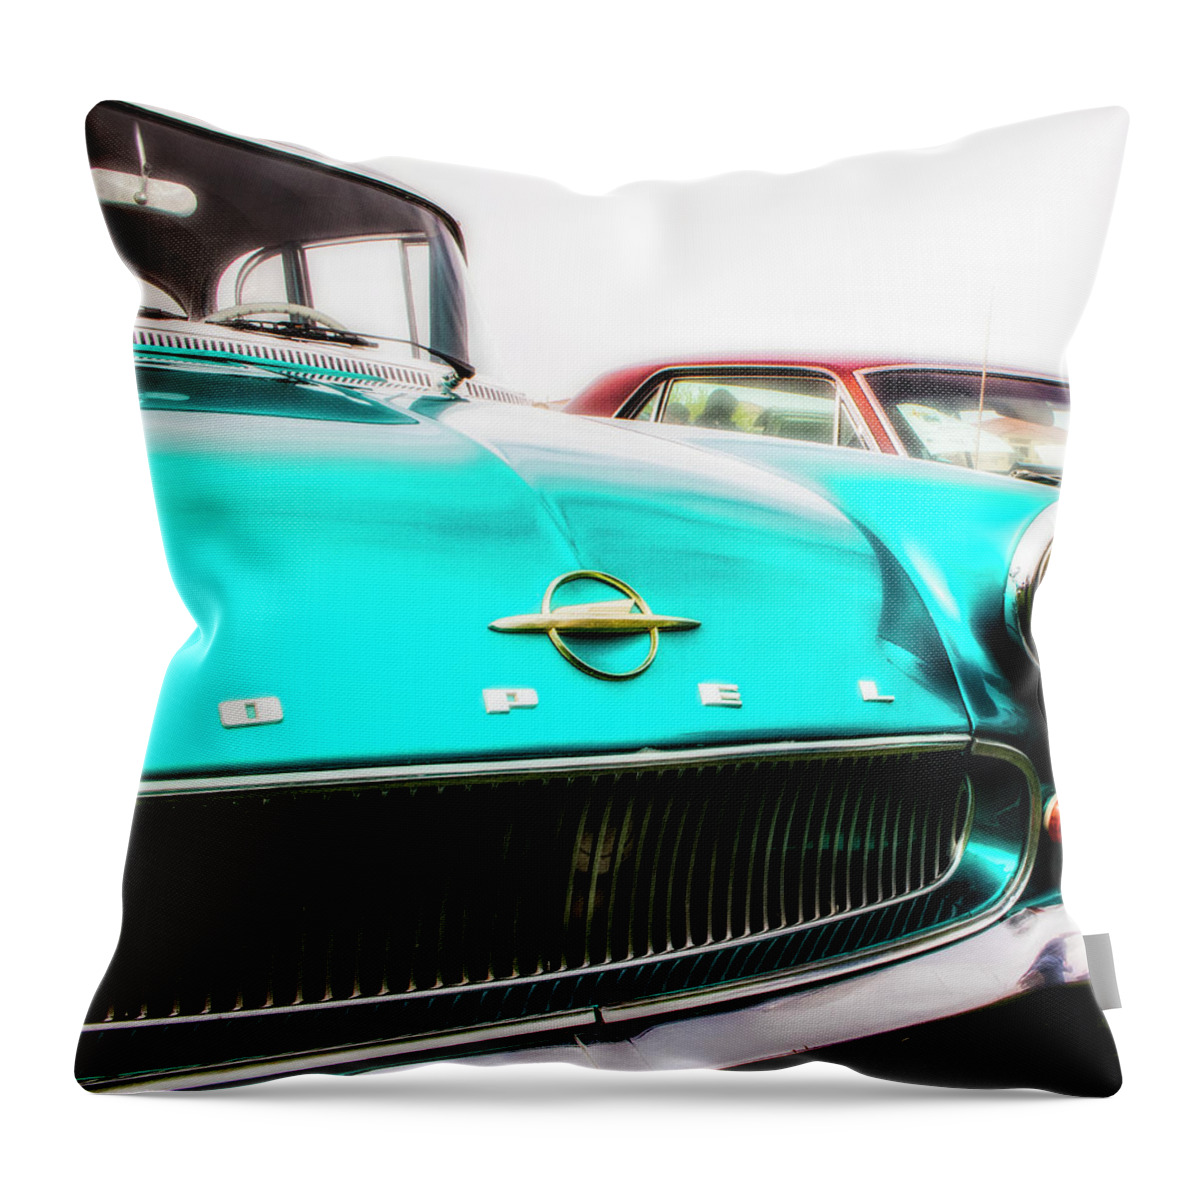 Cars Throw Pillow featuring the photograph El Kapitan by Mark David Gerson